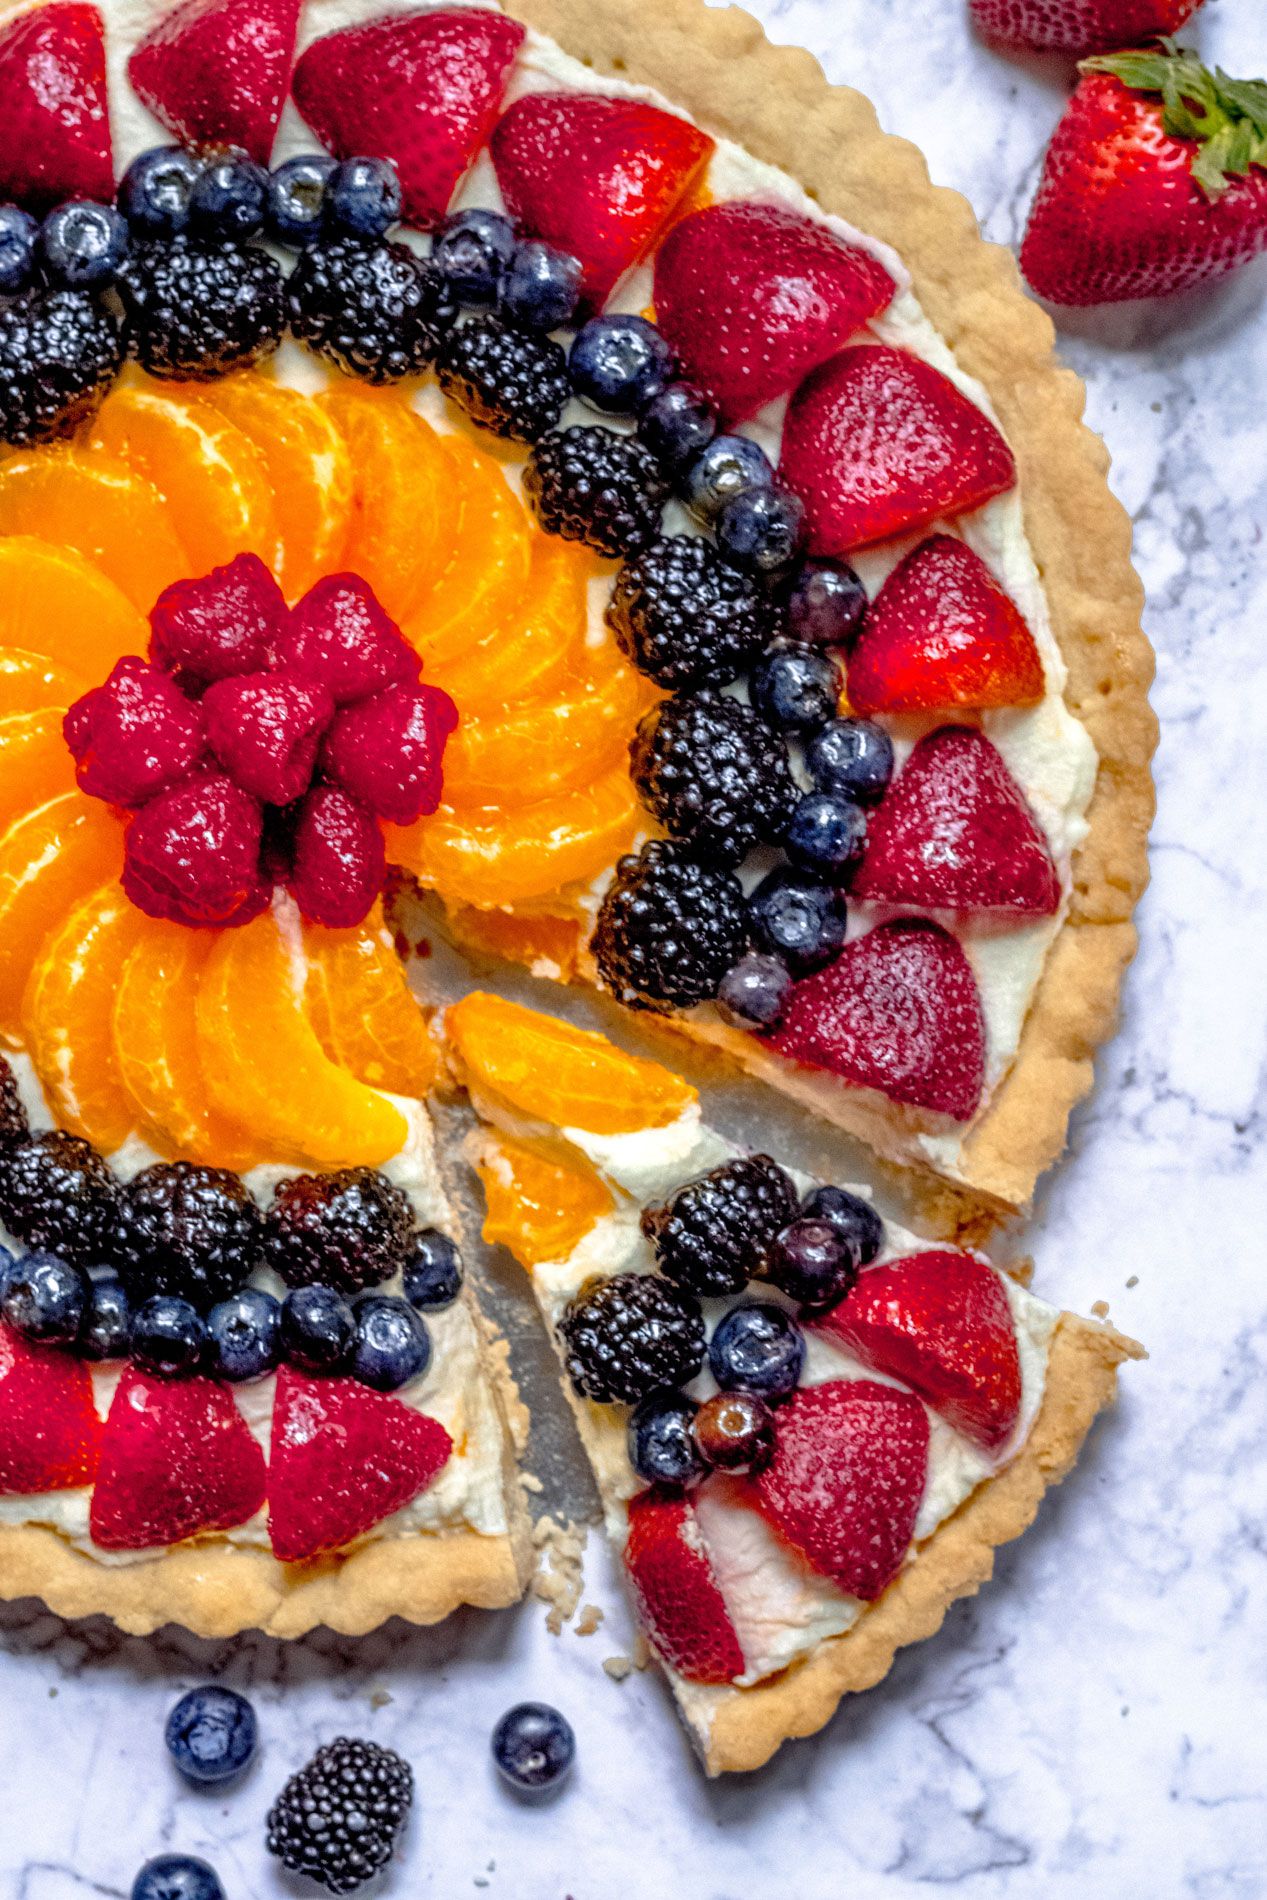 50 Best Fruit Dessert Recipes Easy Desserts With Fruit Delish Com